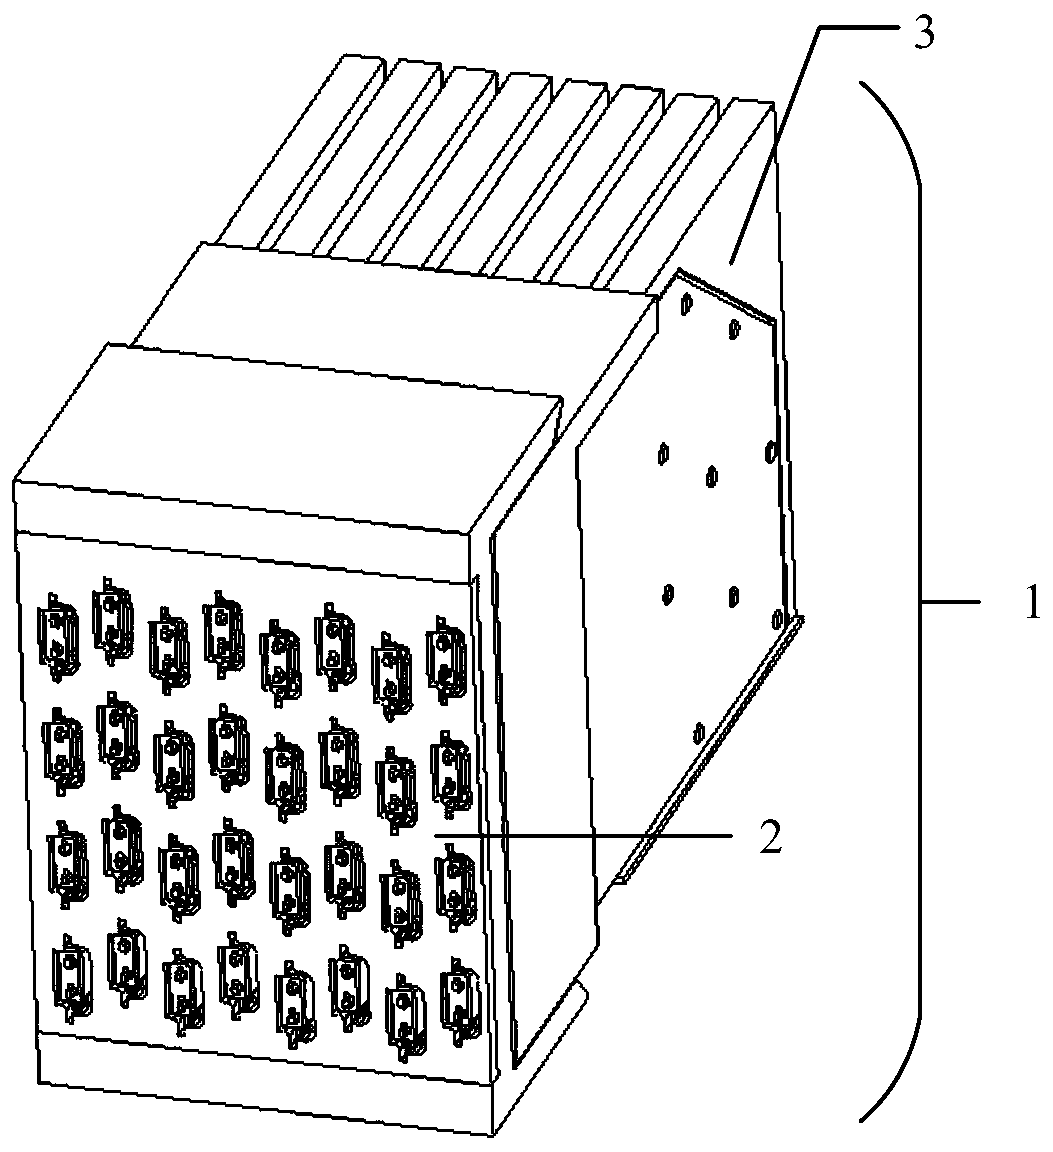 Signal connector